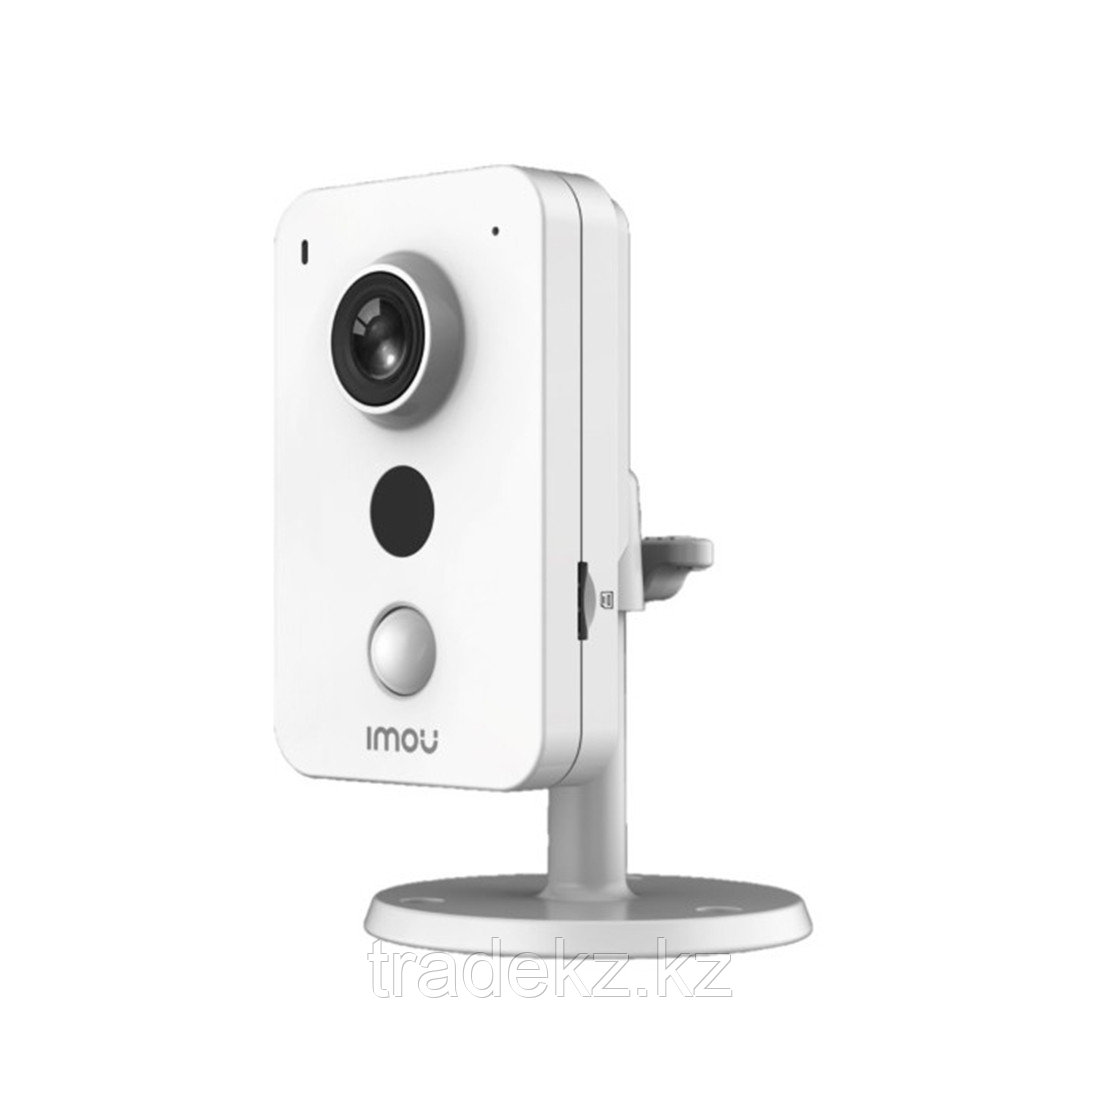 Интернет-камера, Wi-Fi видеокамера Dahua DH-IPC-K22P